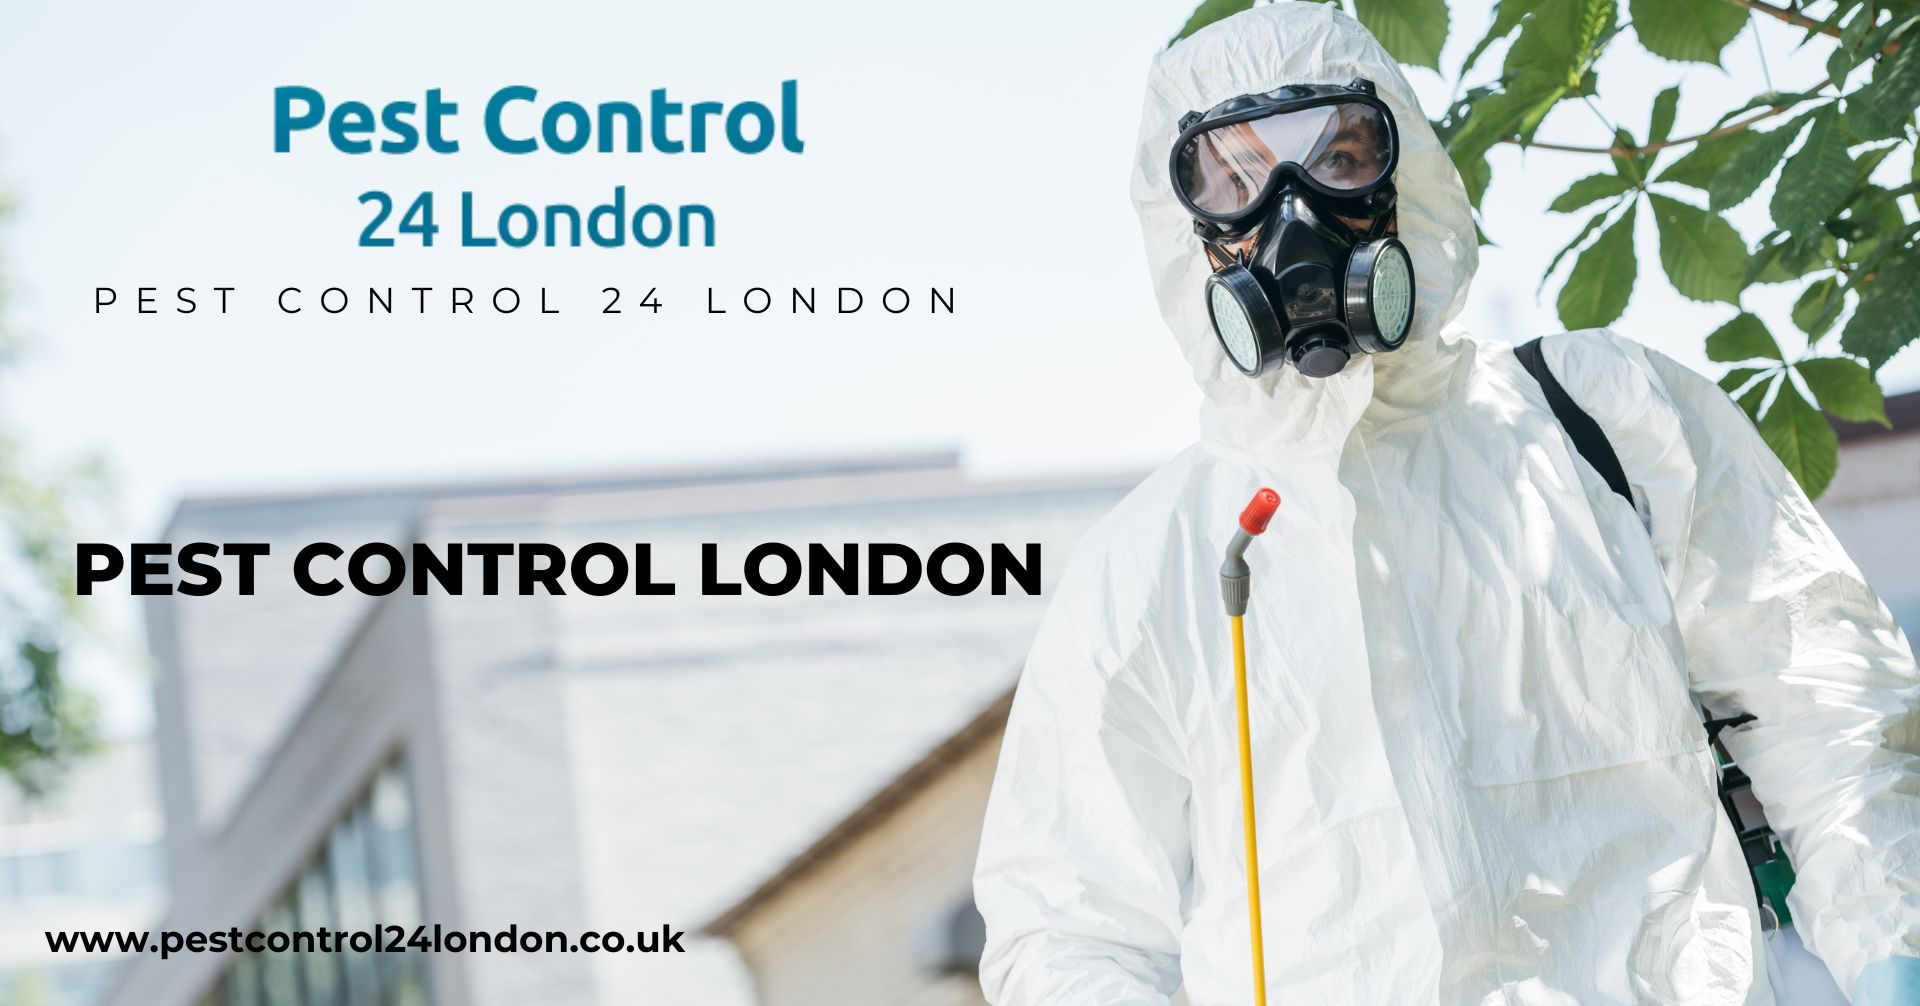 Pest Control London: Restaurant Pest Control Guide